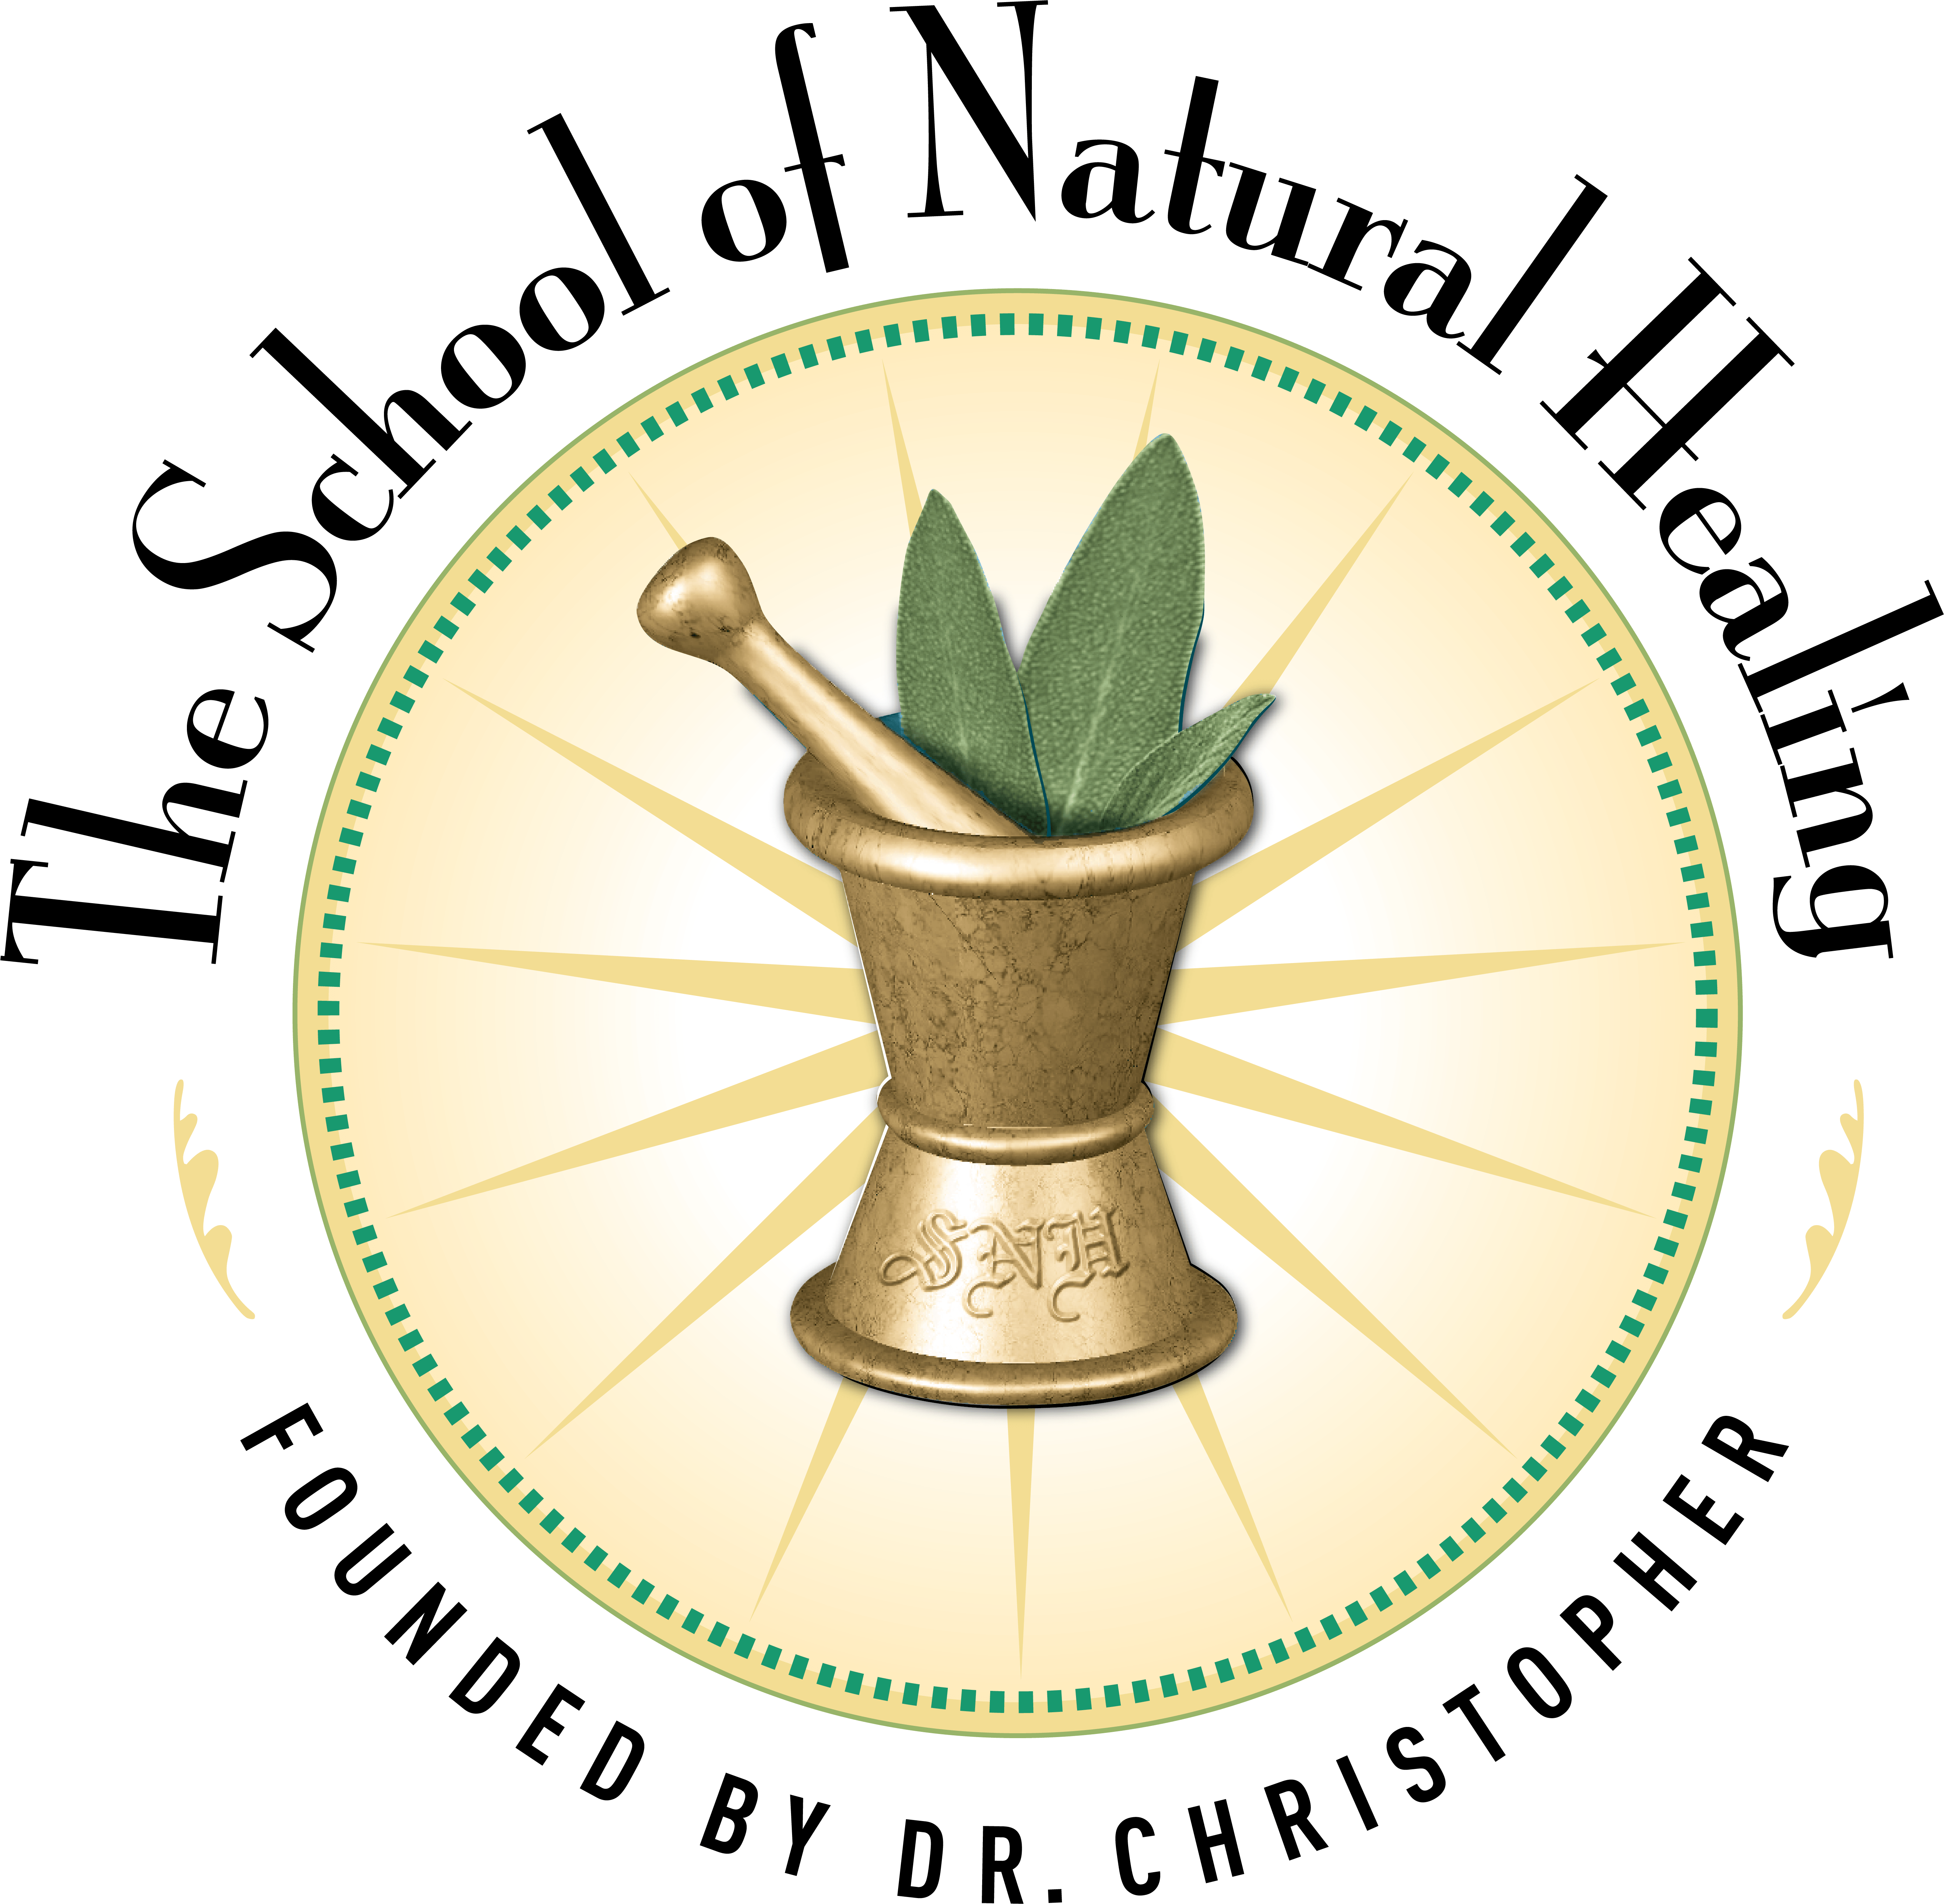 The School of Natural Healing online